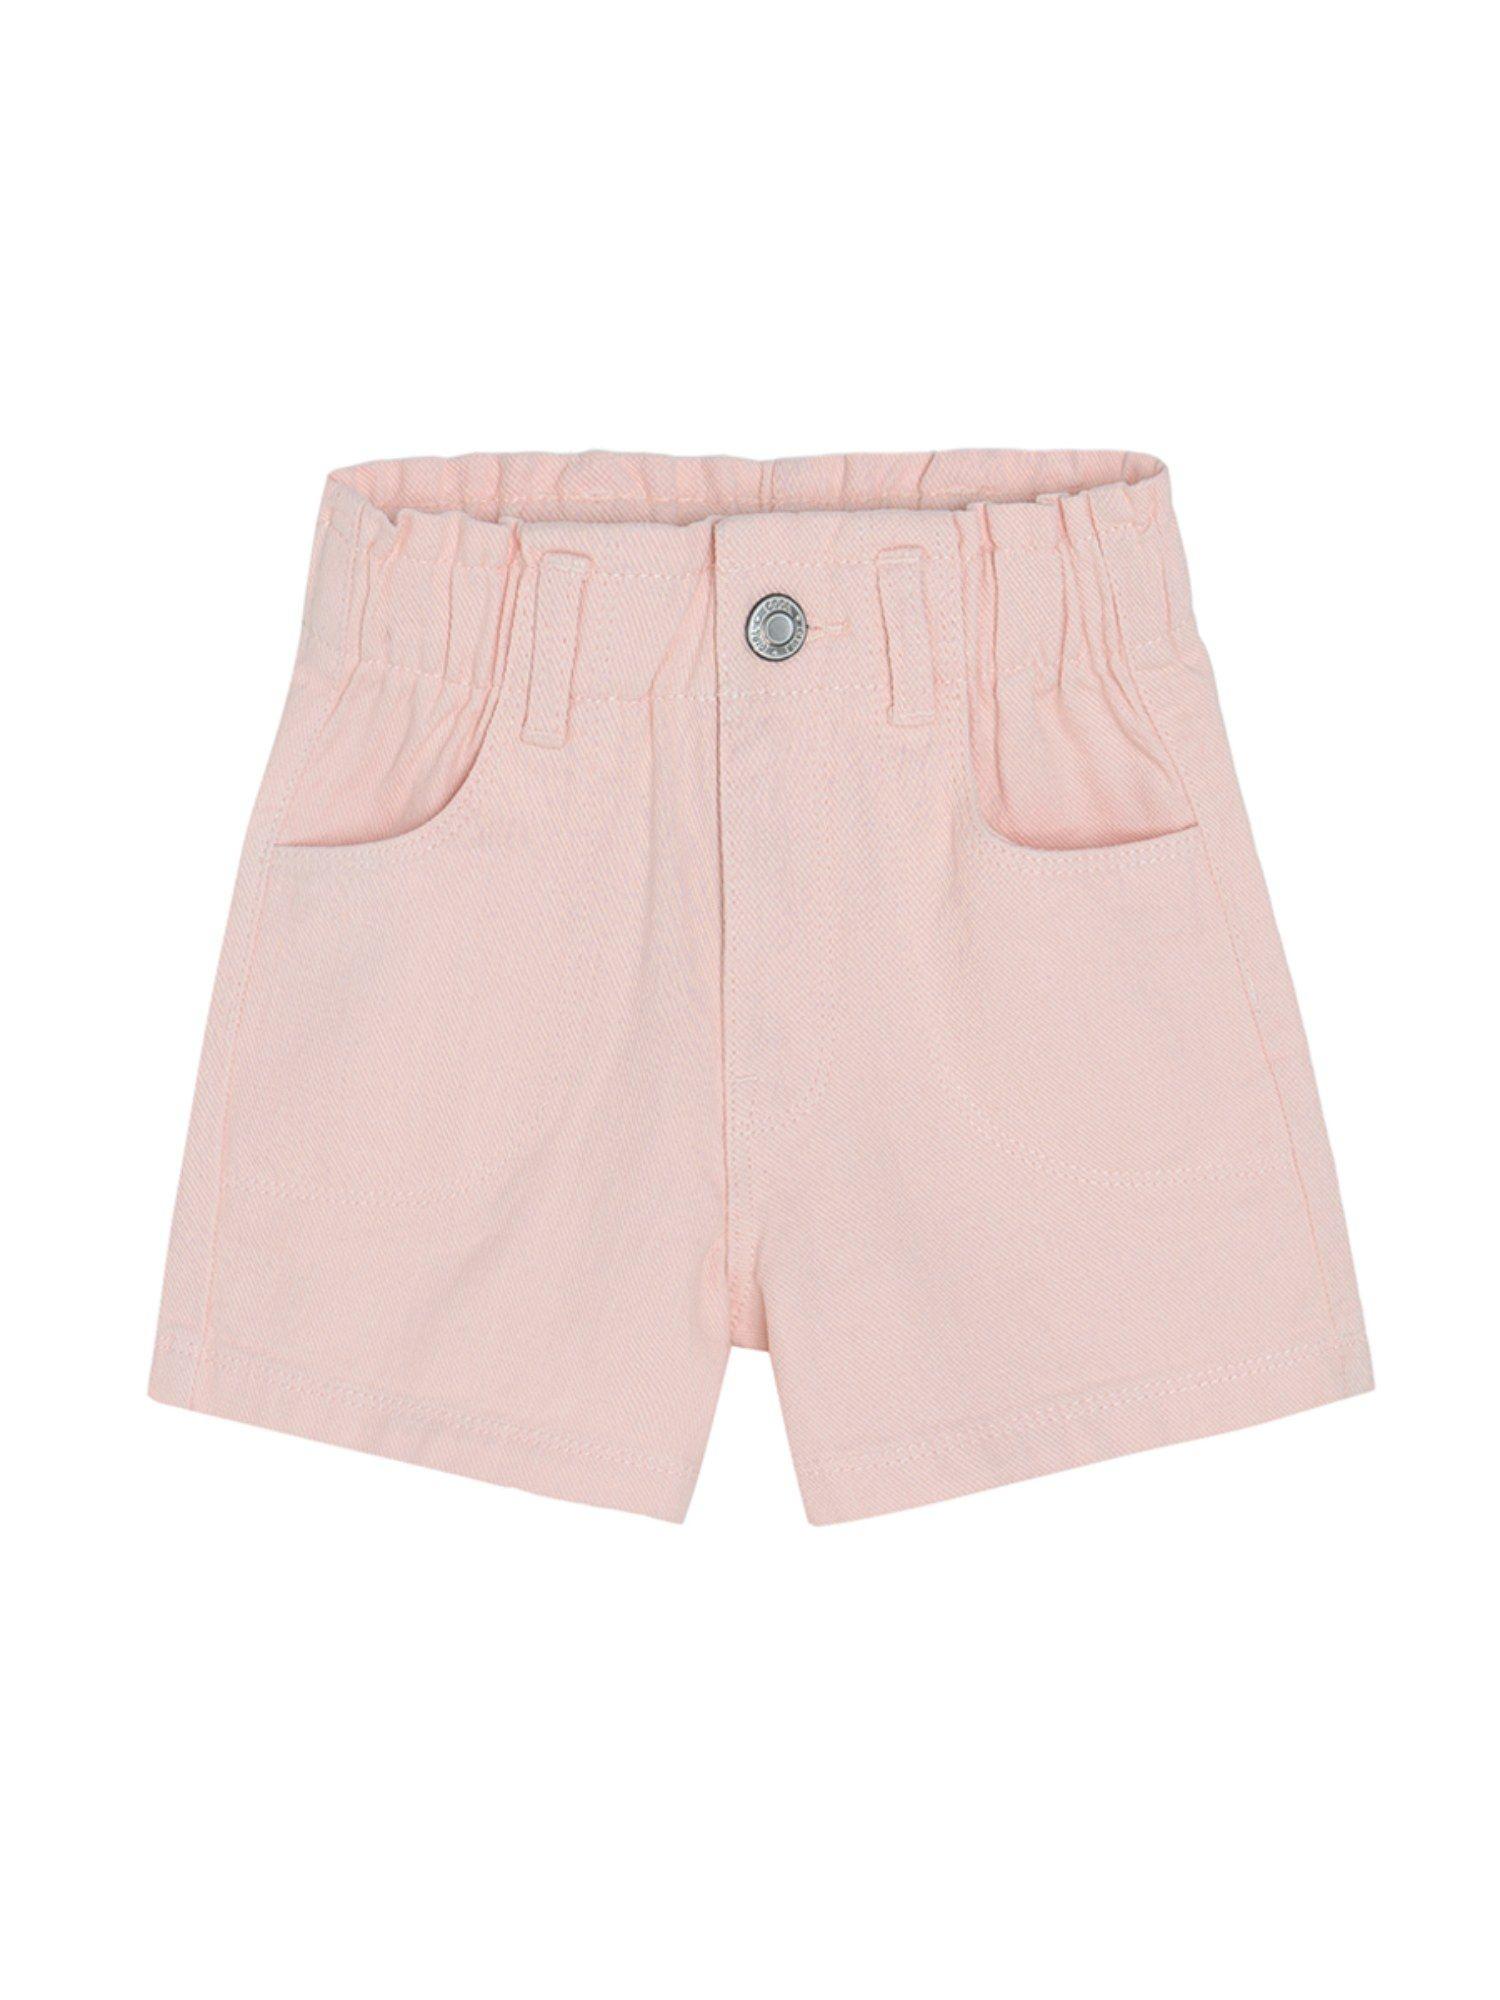 smyk-girls-pink-woven-shorts